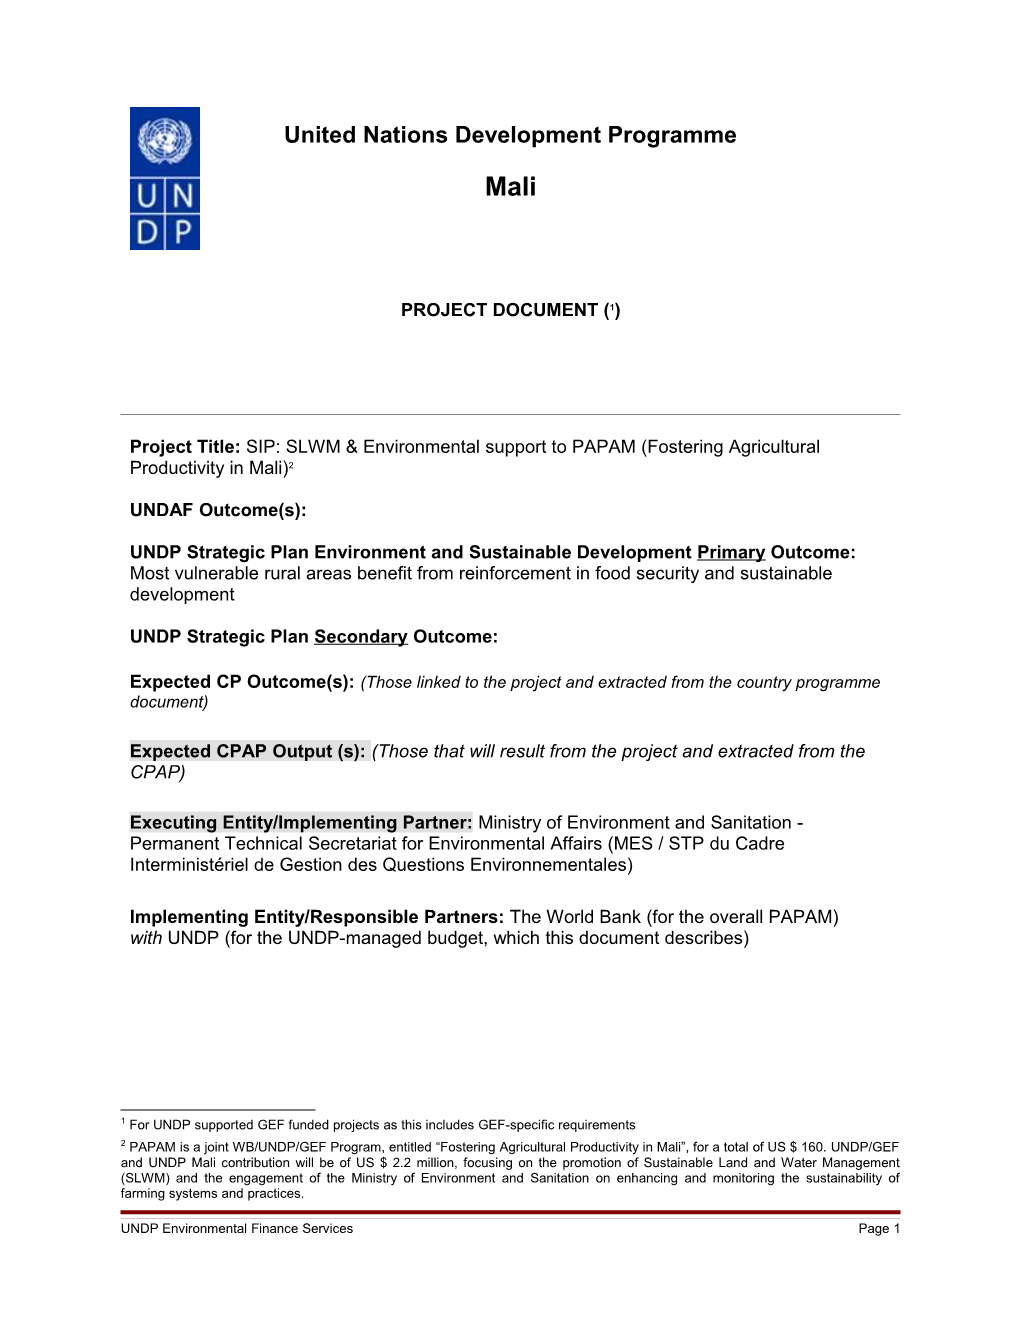 Mali UNDP/GEF Project Document